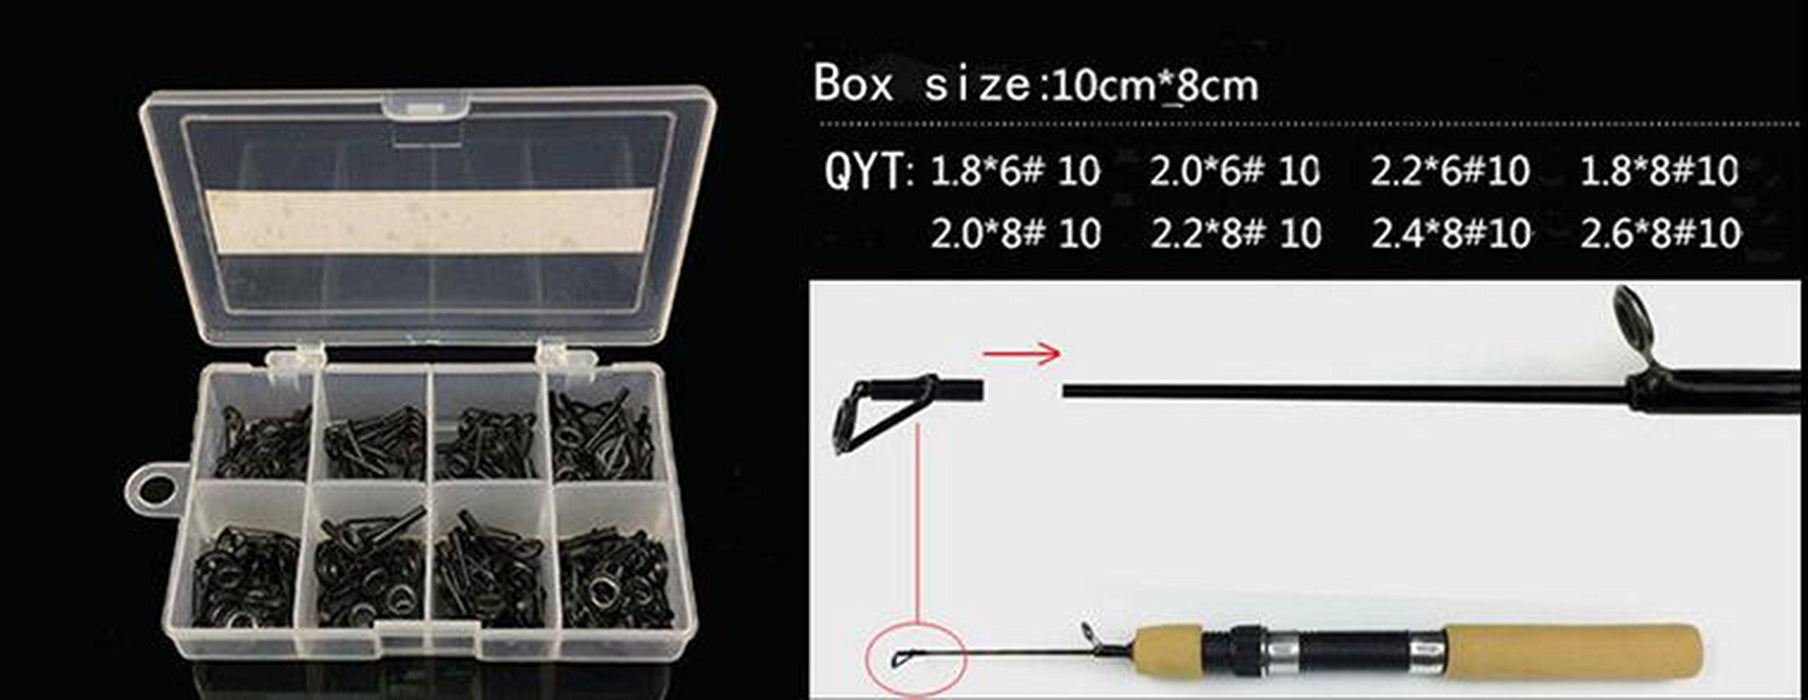 8 Pieces Fishing Rod Tips Kit Rod Tip Repair Kit Stainless Steel